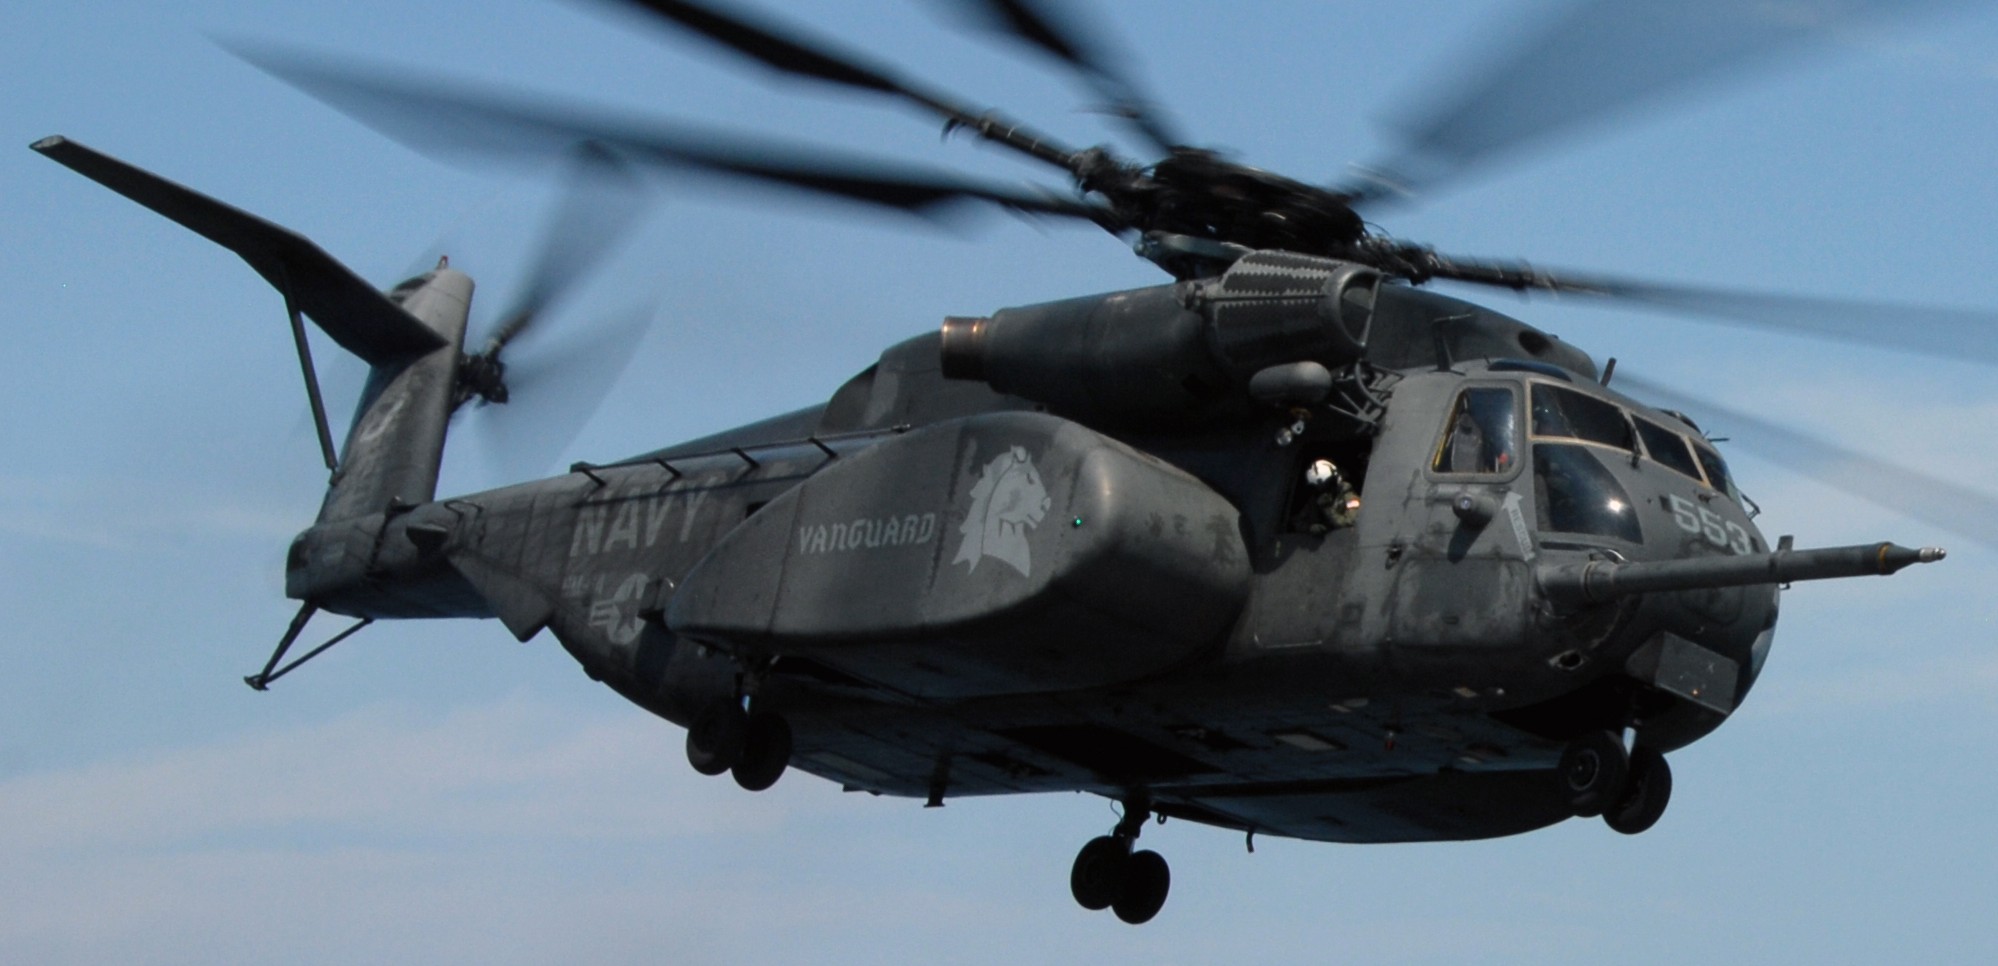 hm-14 vanguard helicopter mine countermeasures squadron navy mh-53e sea dragon 156